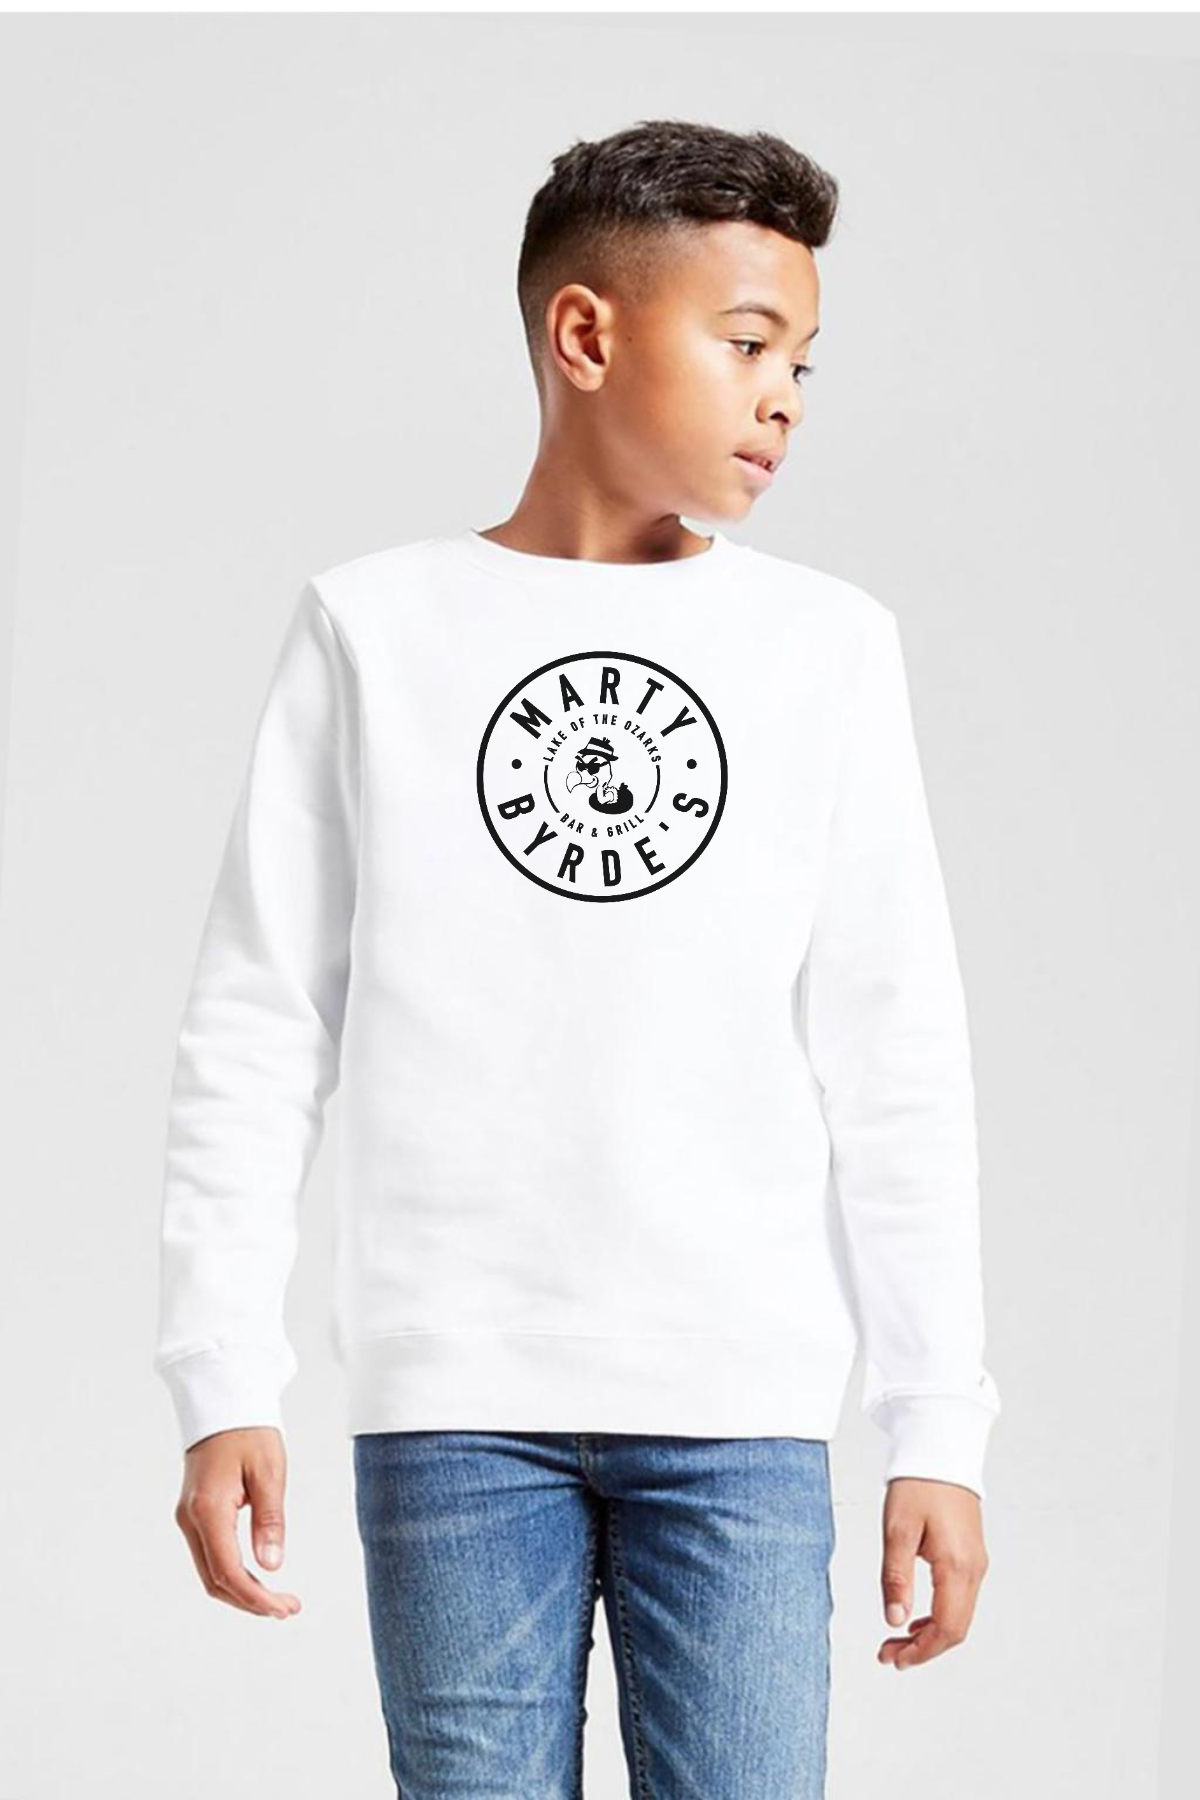 Ozark Marty Byrdes Logo Beyaz Çocuk 2ip Sweatshirt